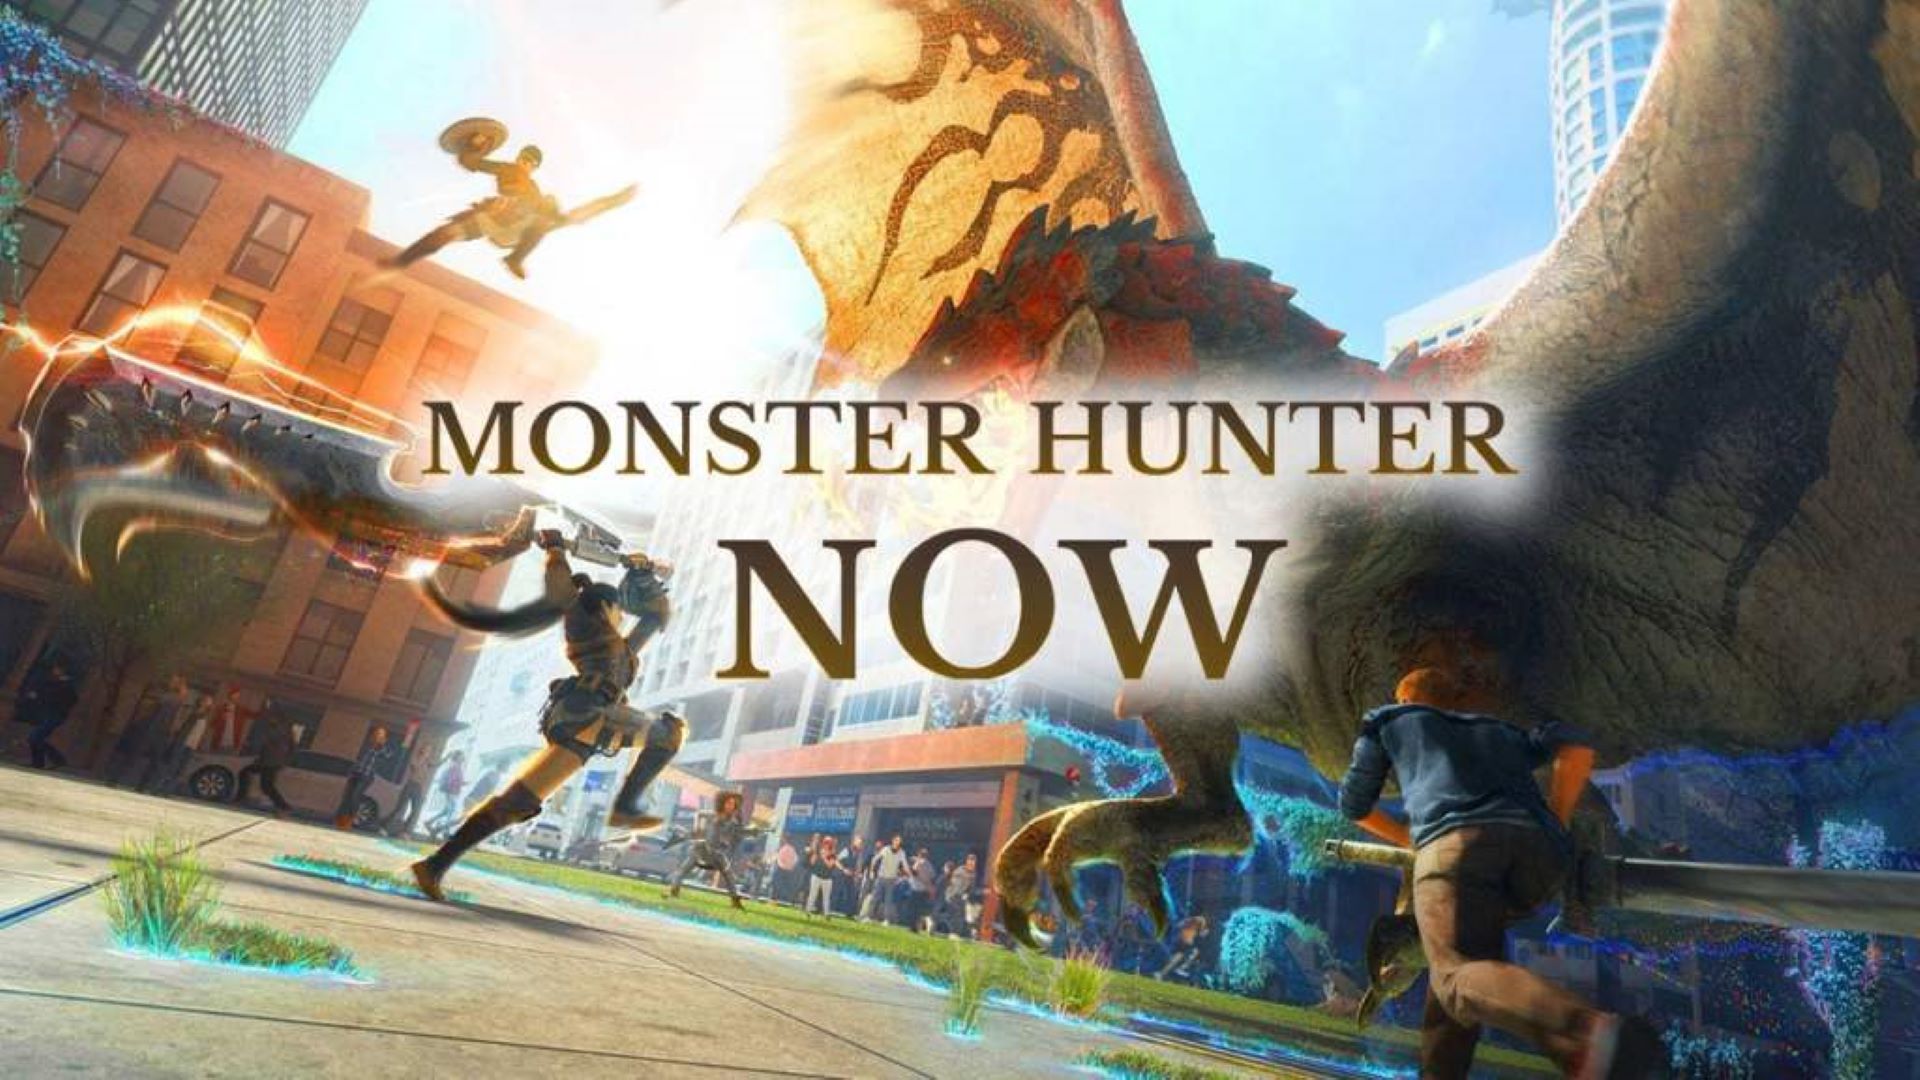 Monster Hunter Now Is A New Mobile Game From Pokémon Go Developer